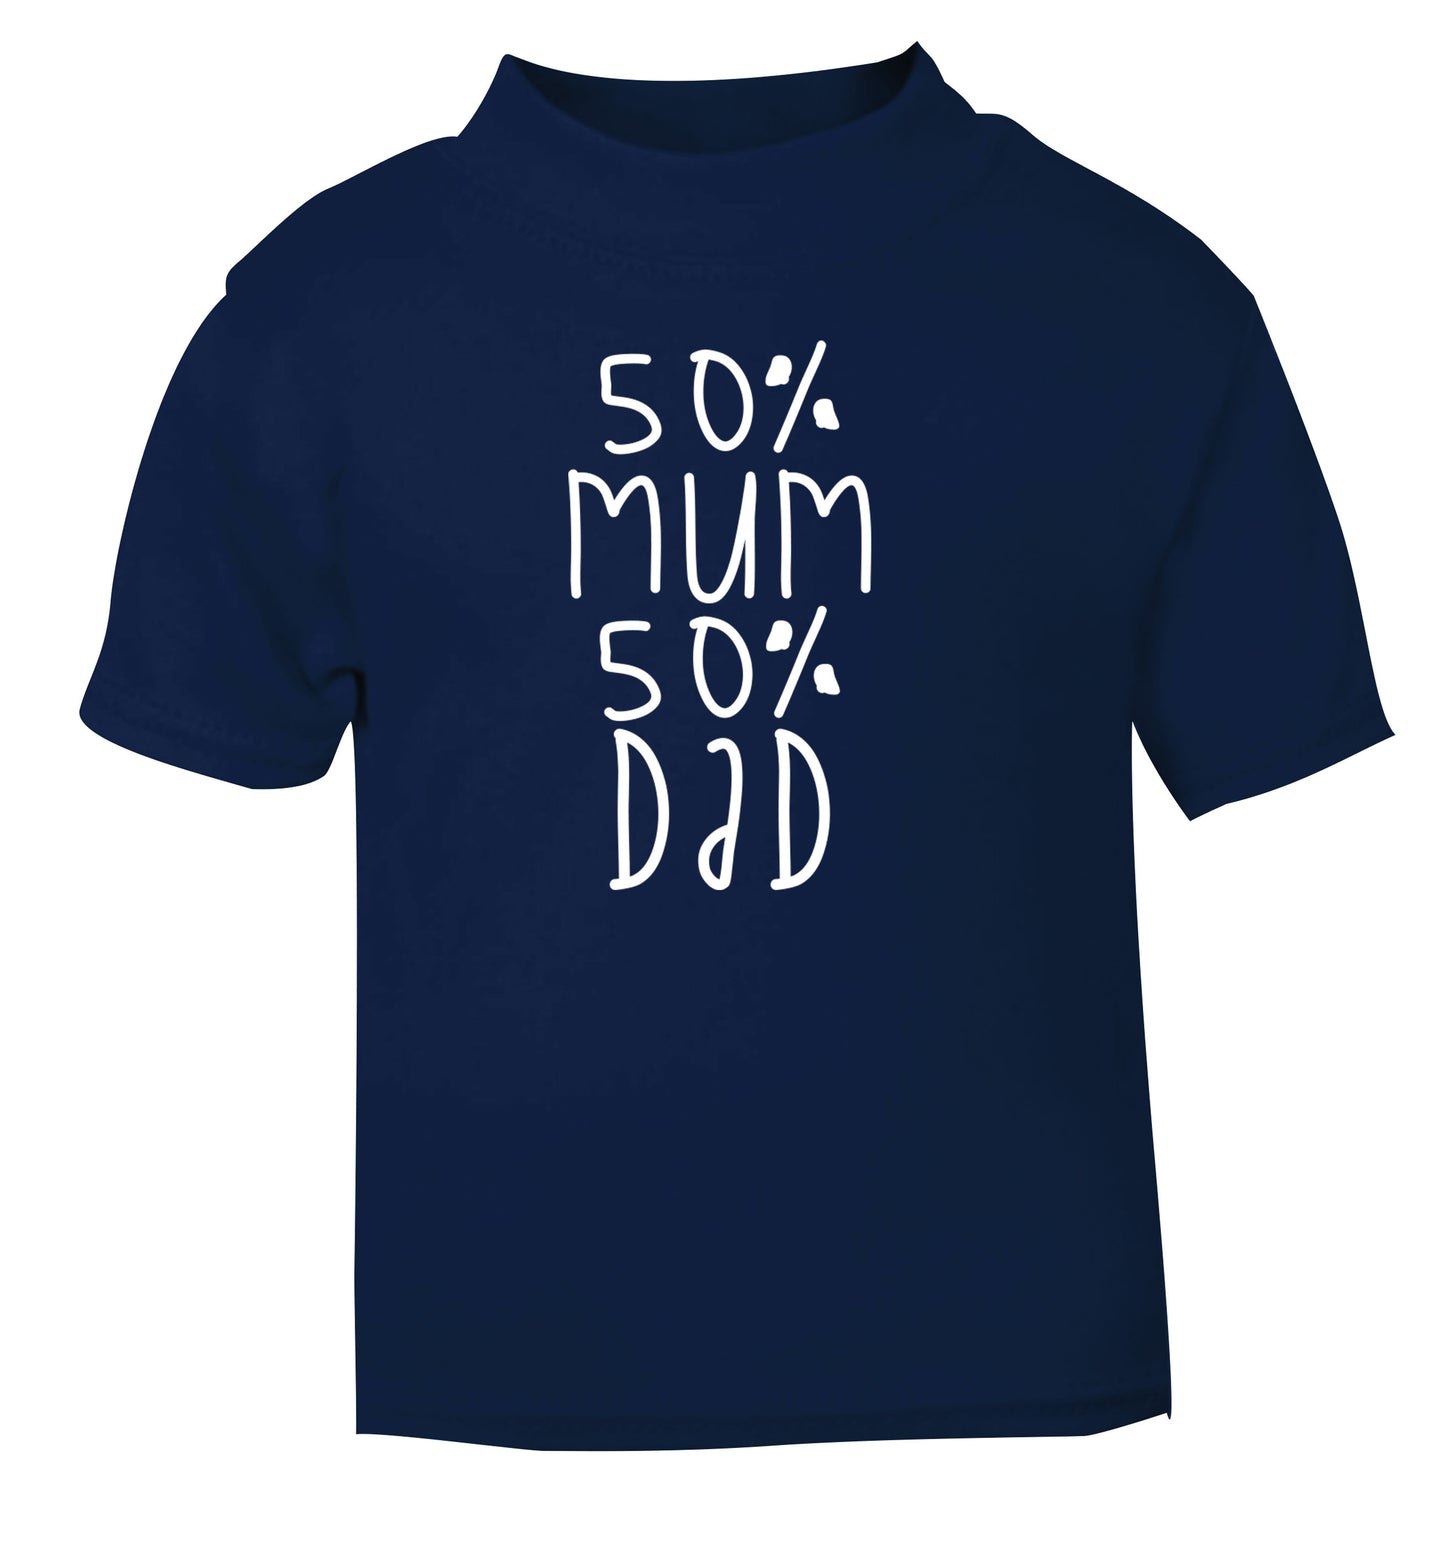 50% mum 50% dad navy Baby Toddler Tshirt 2 Years